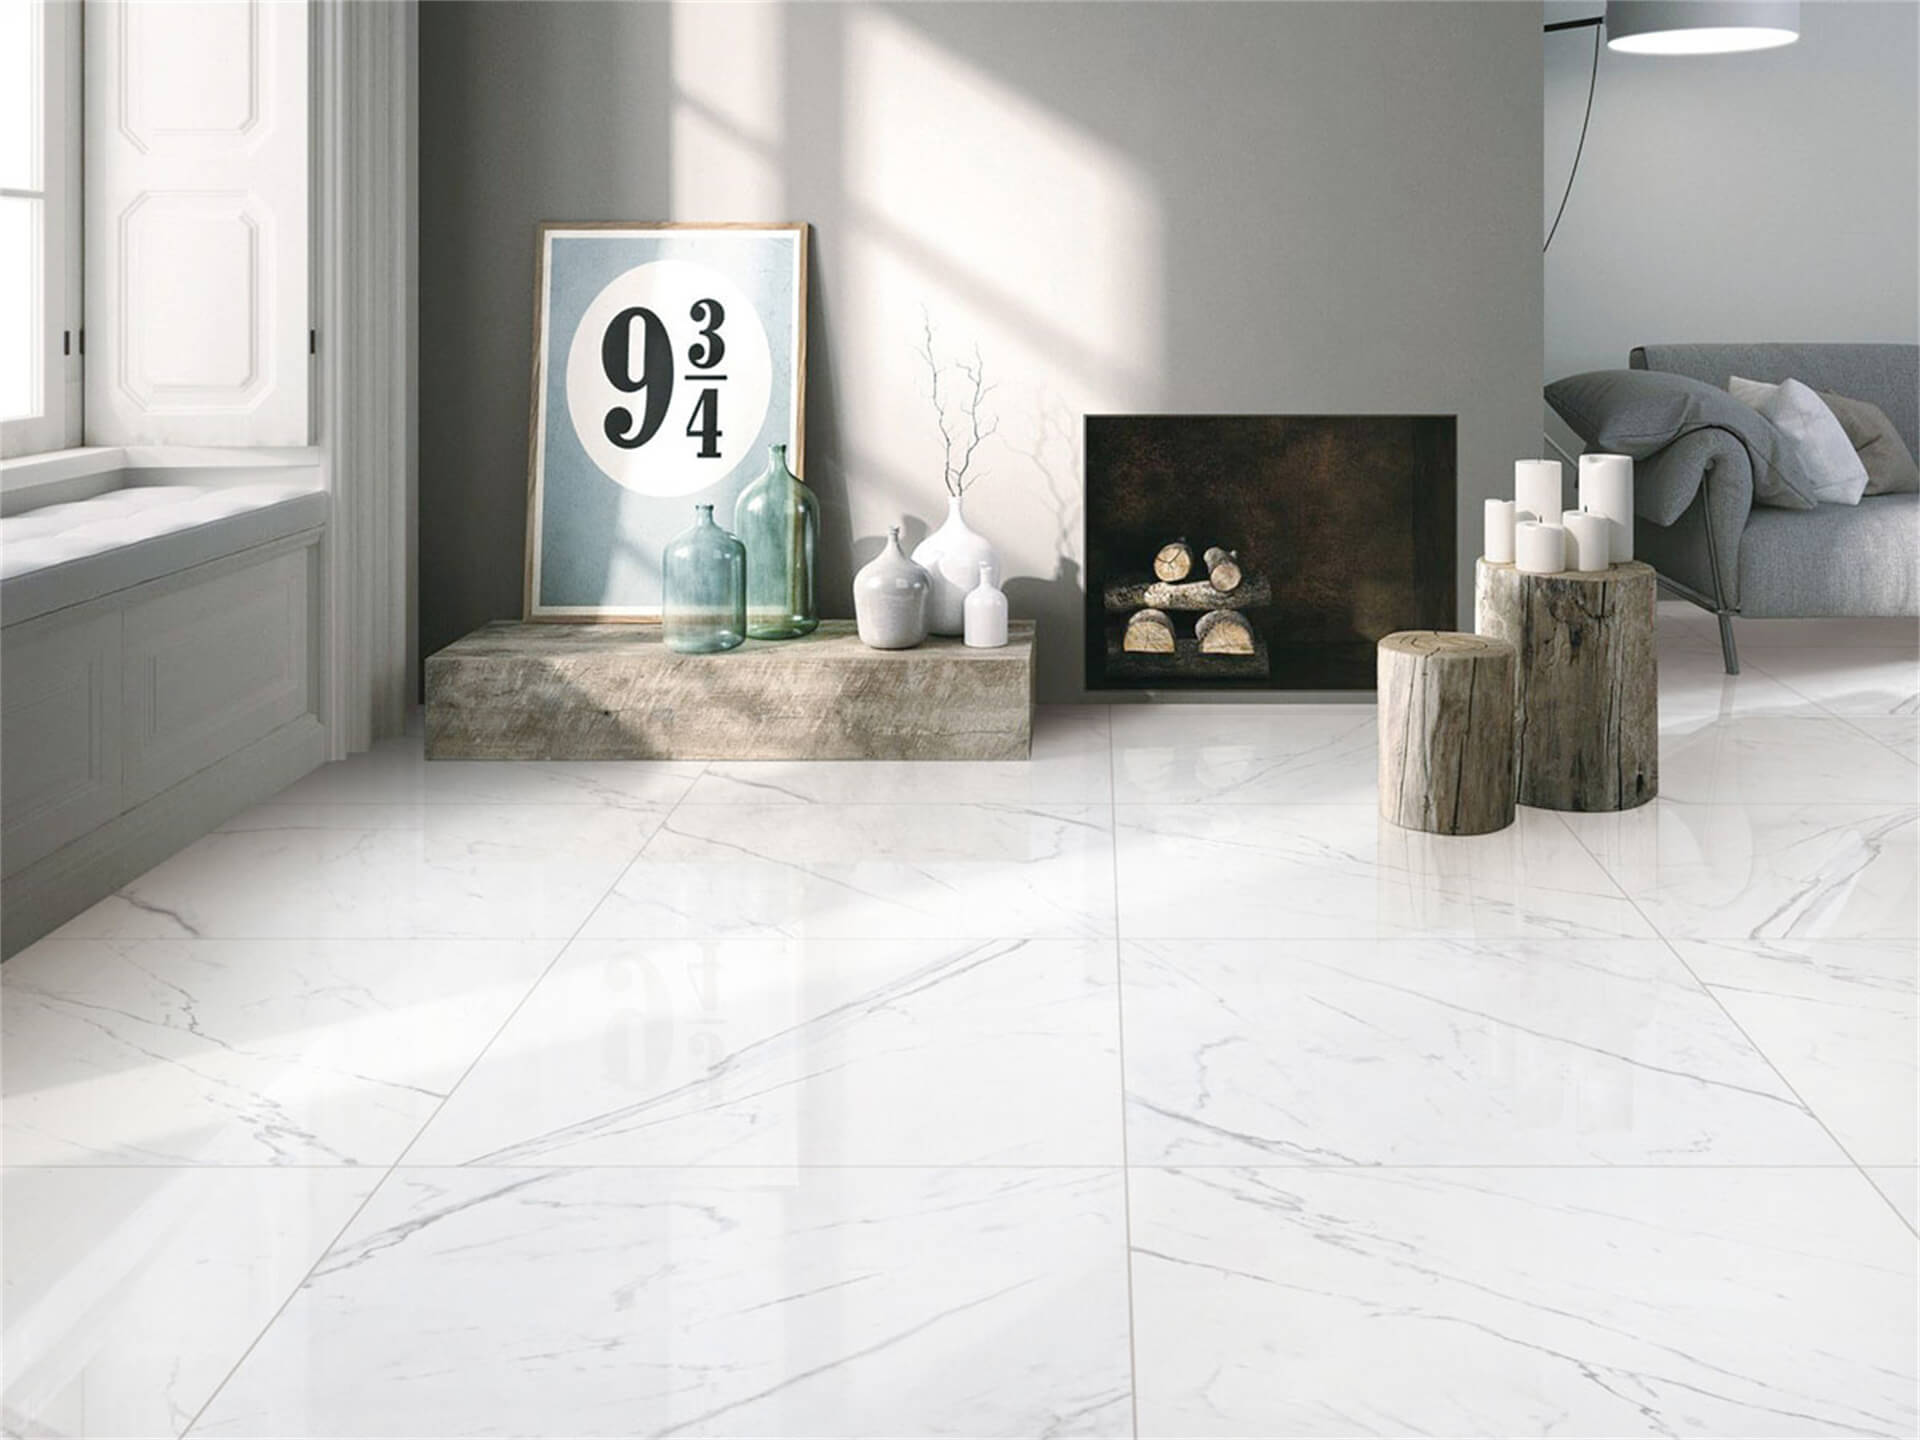 A basic marble flooring with decor